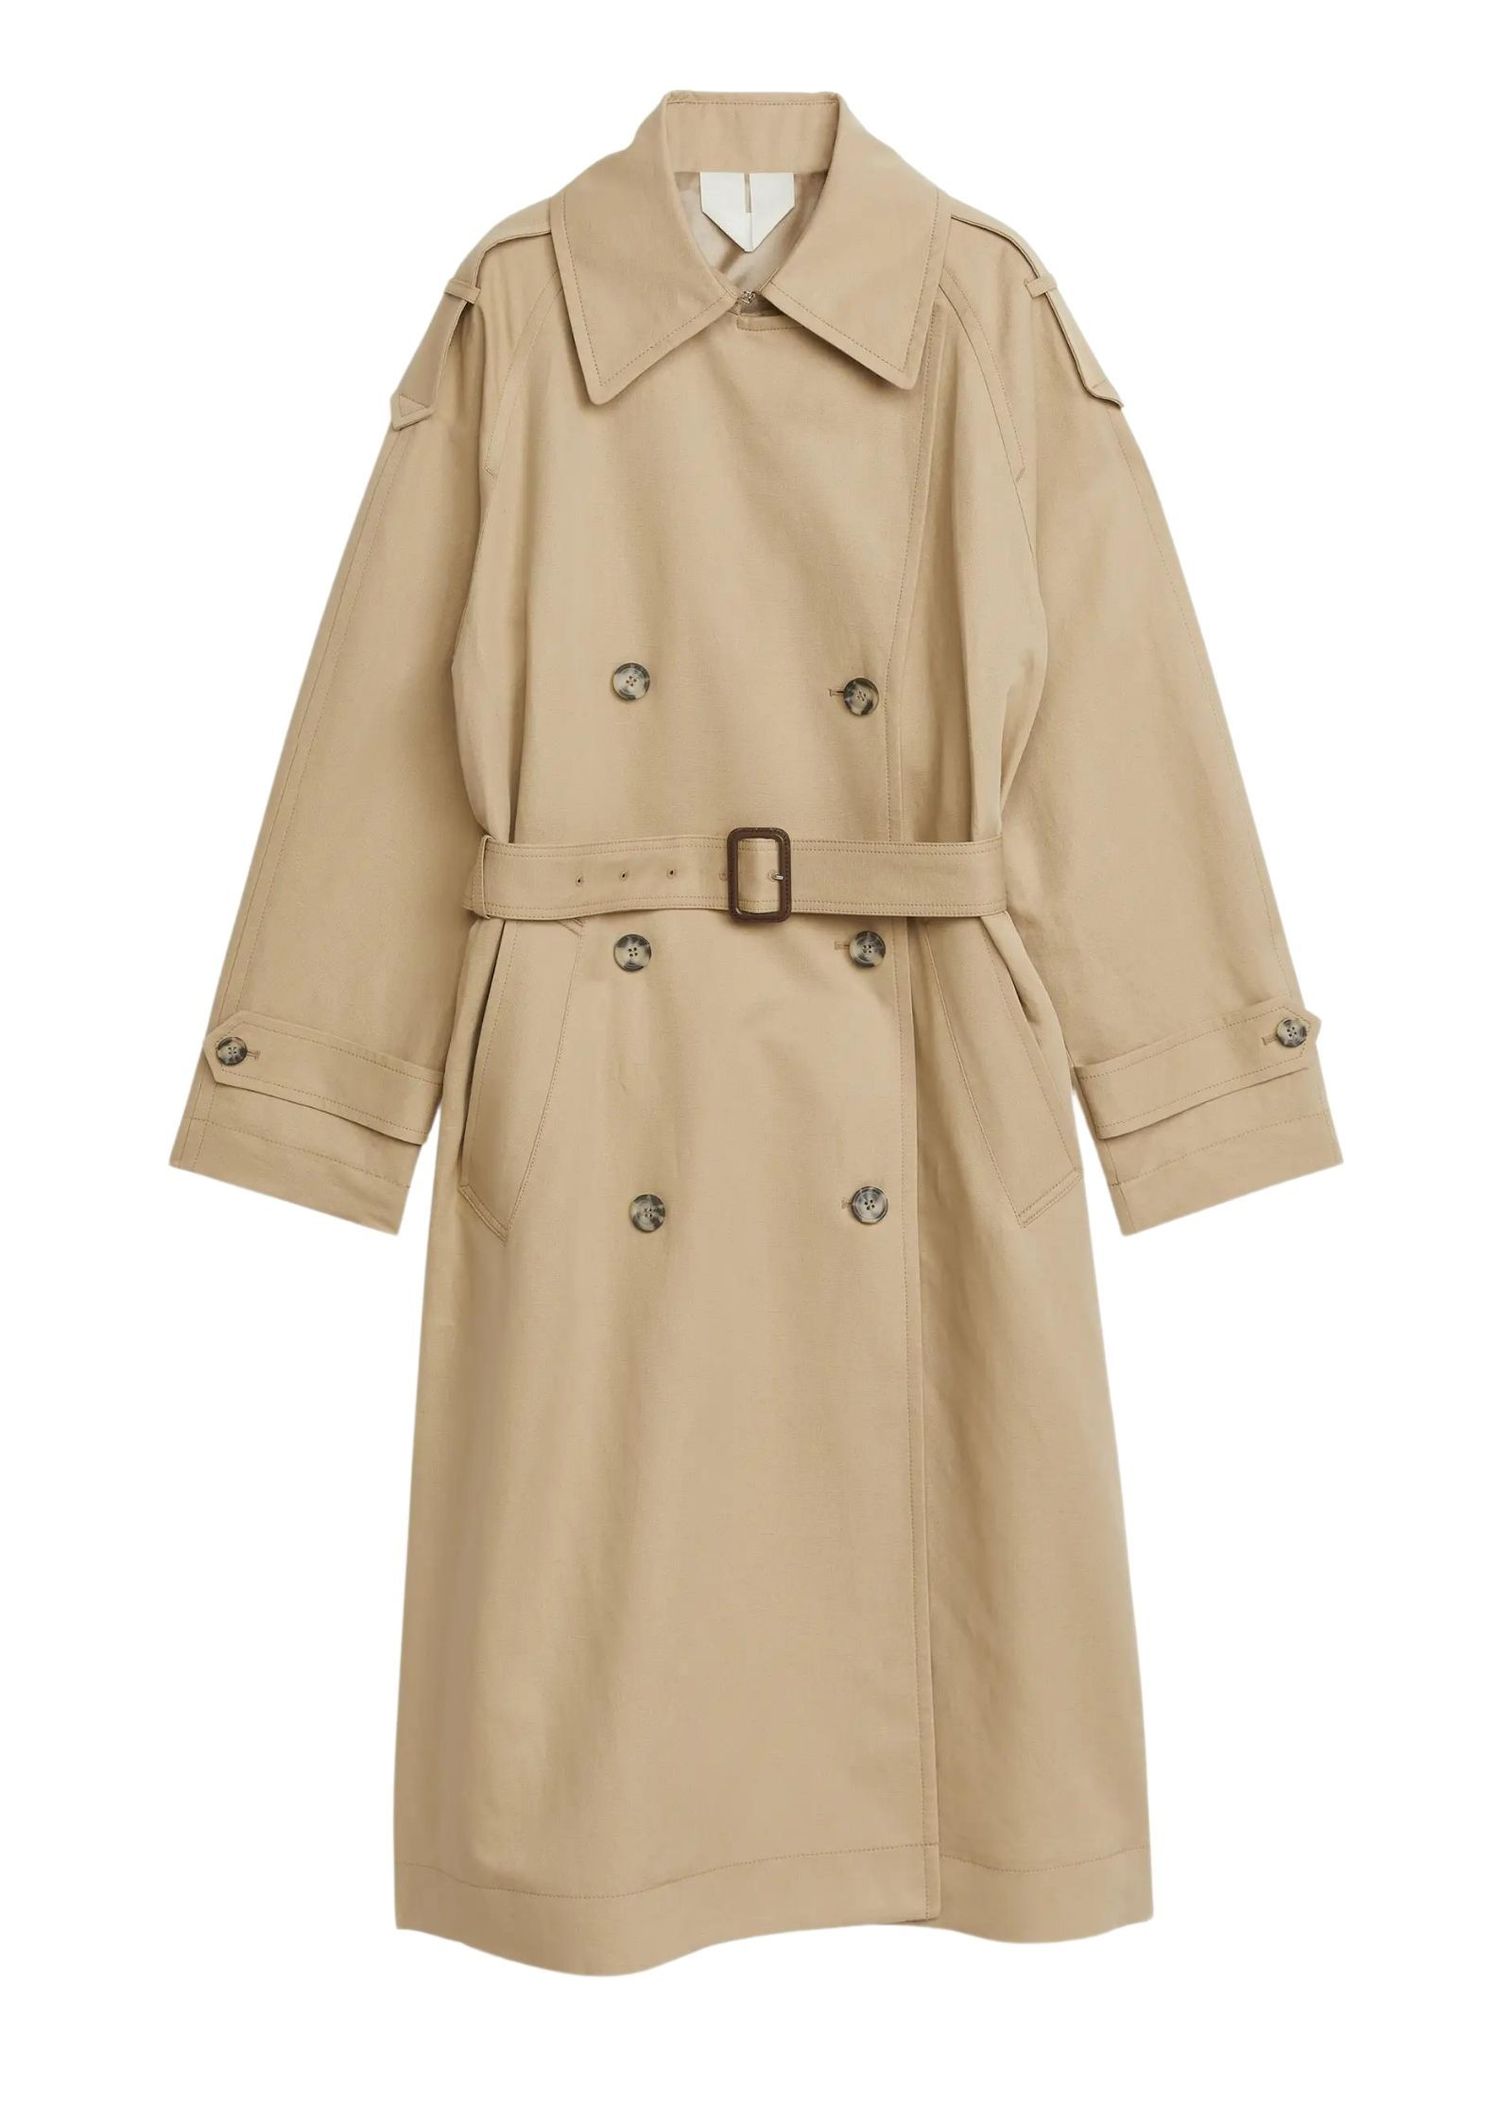 The 11 best trench coats to buy now - Vogue Scandinavia